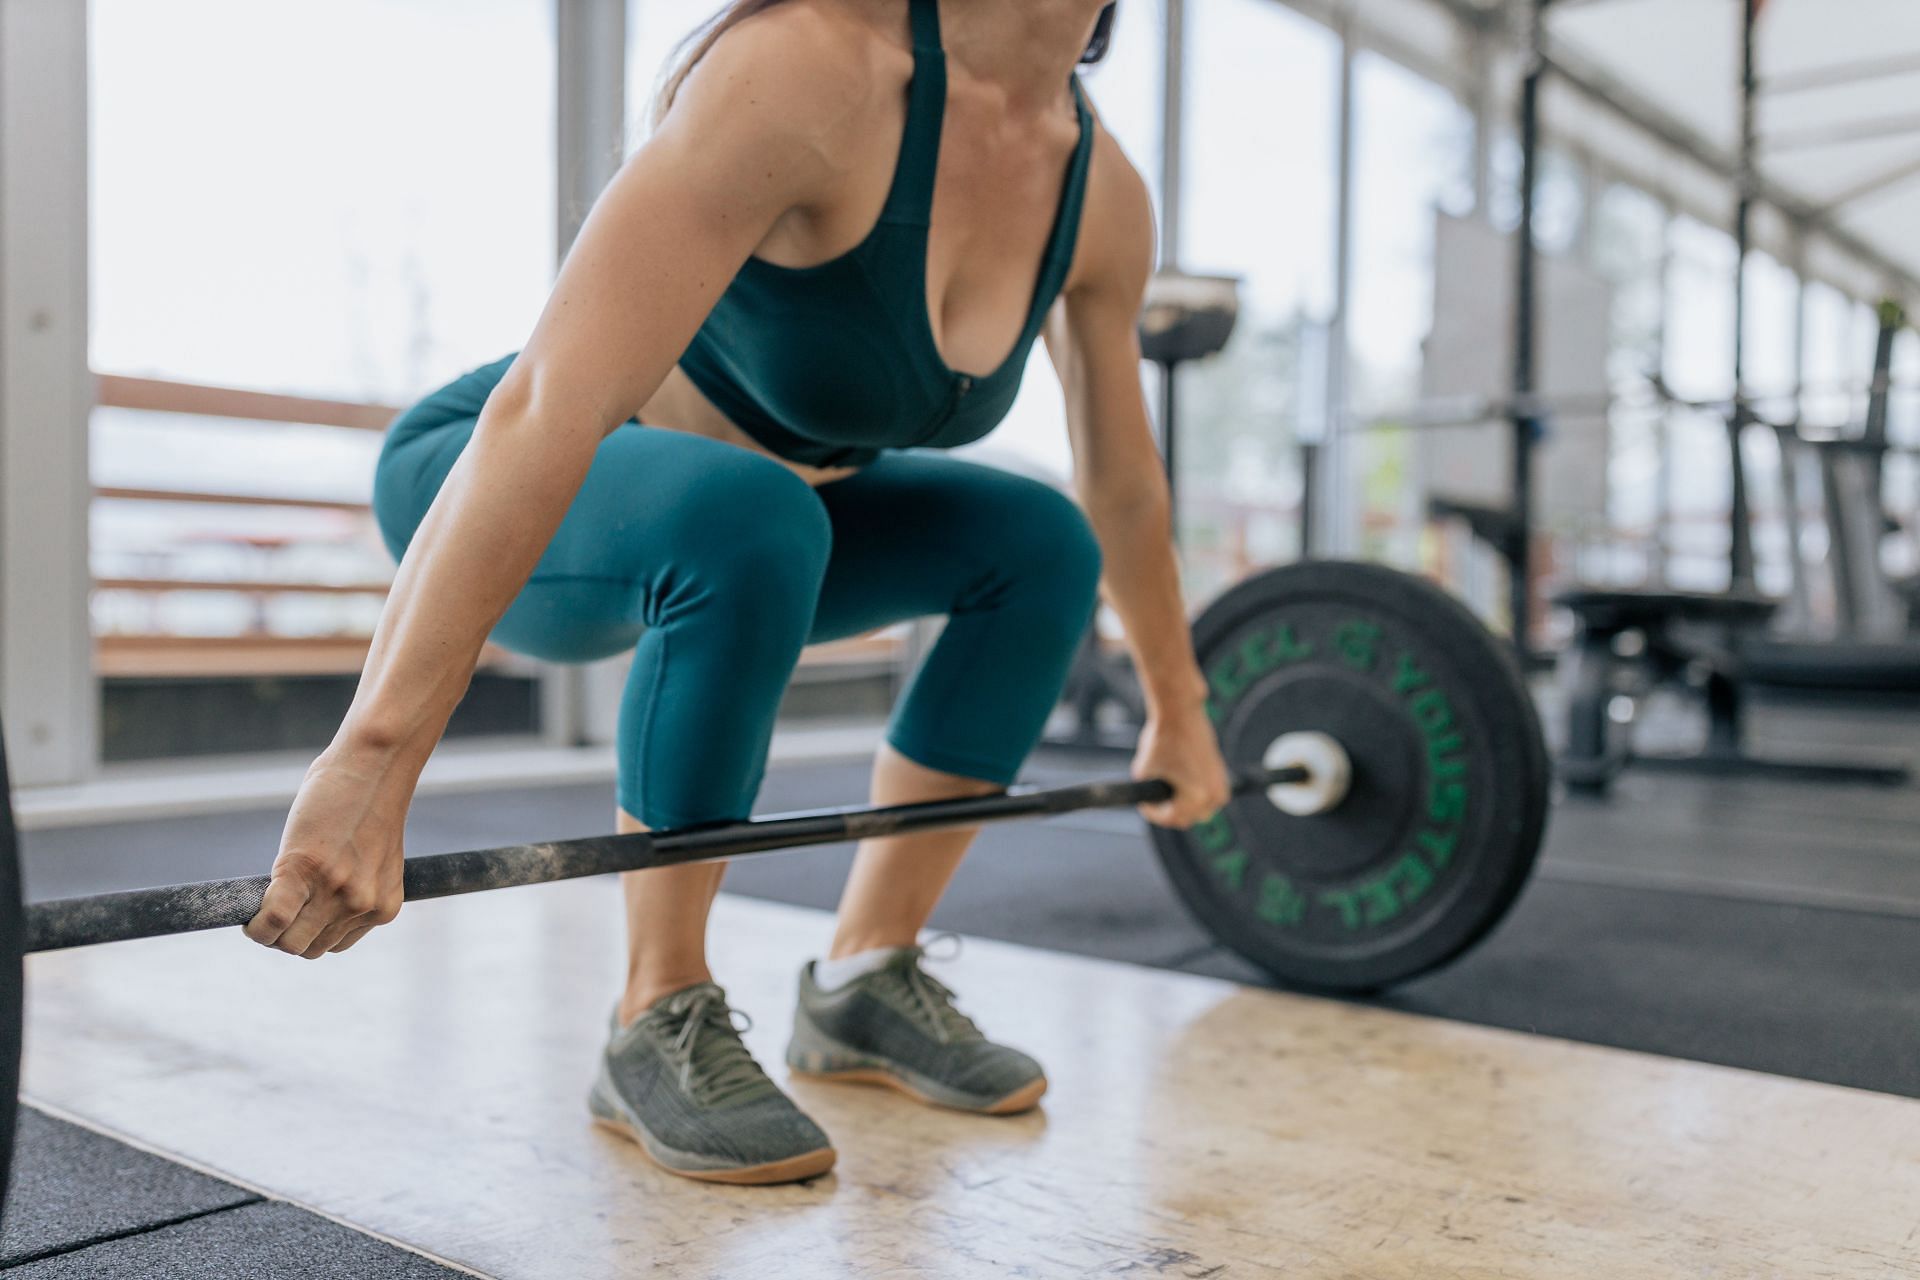 Barbell front squat helps in strengthening your lower body. (Image via Pexels / Anastasia Shuraeva)